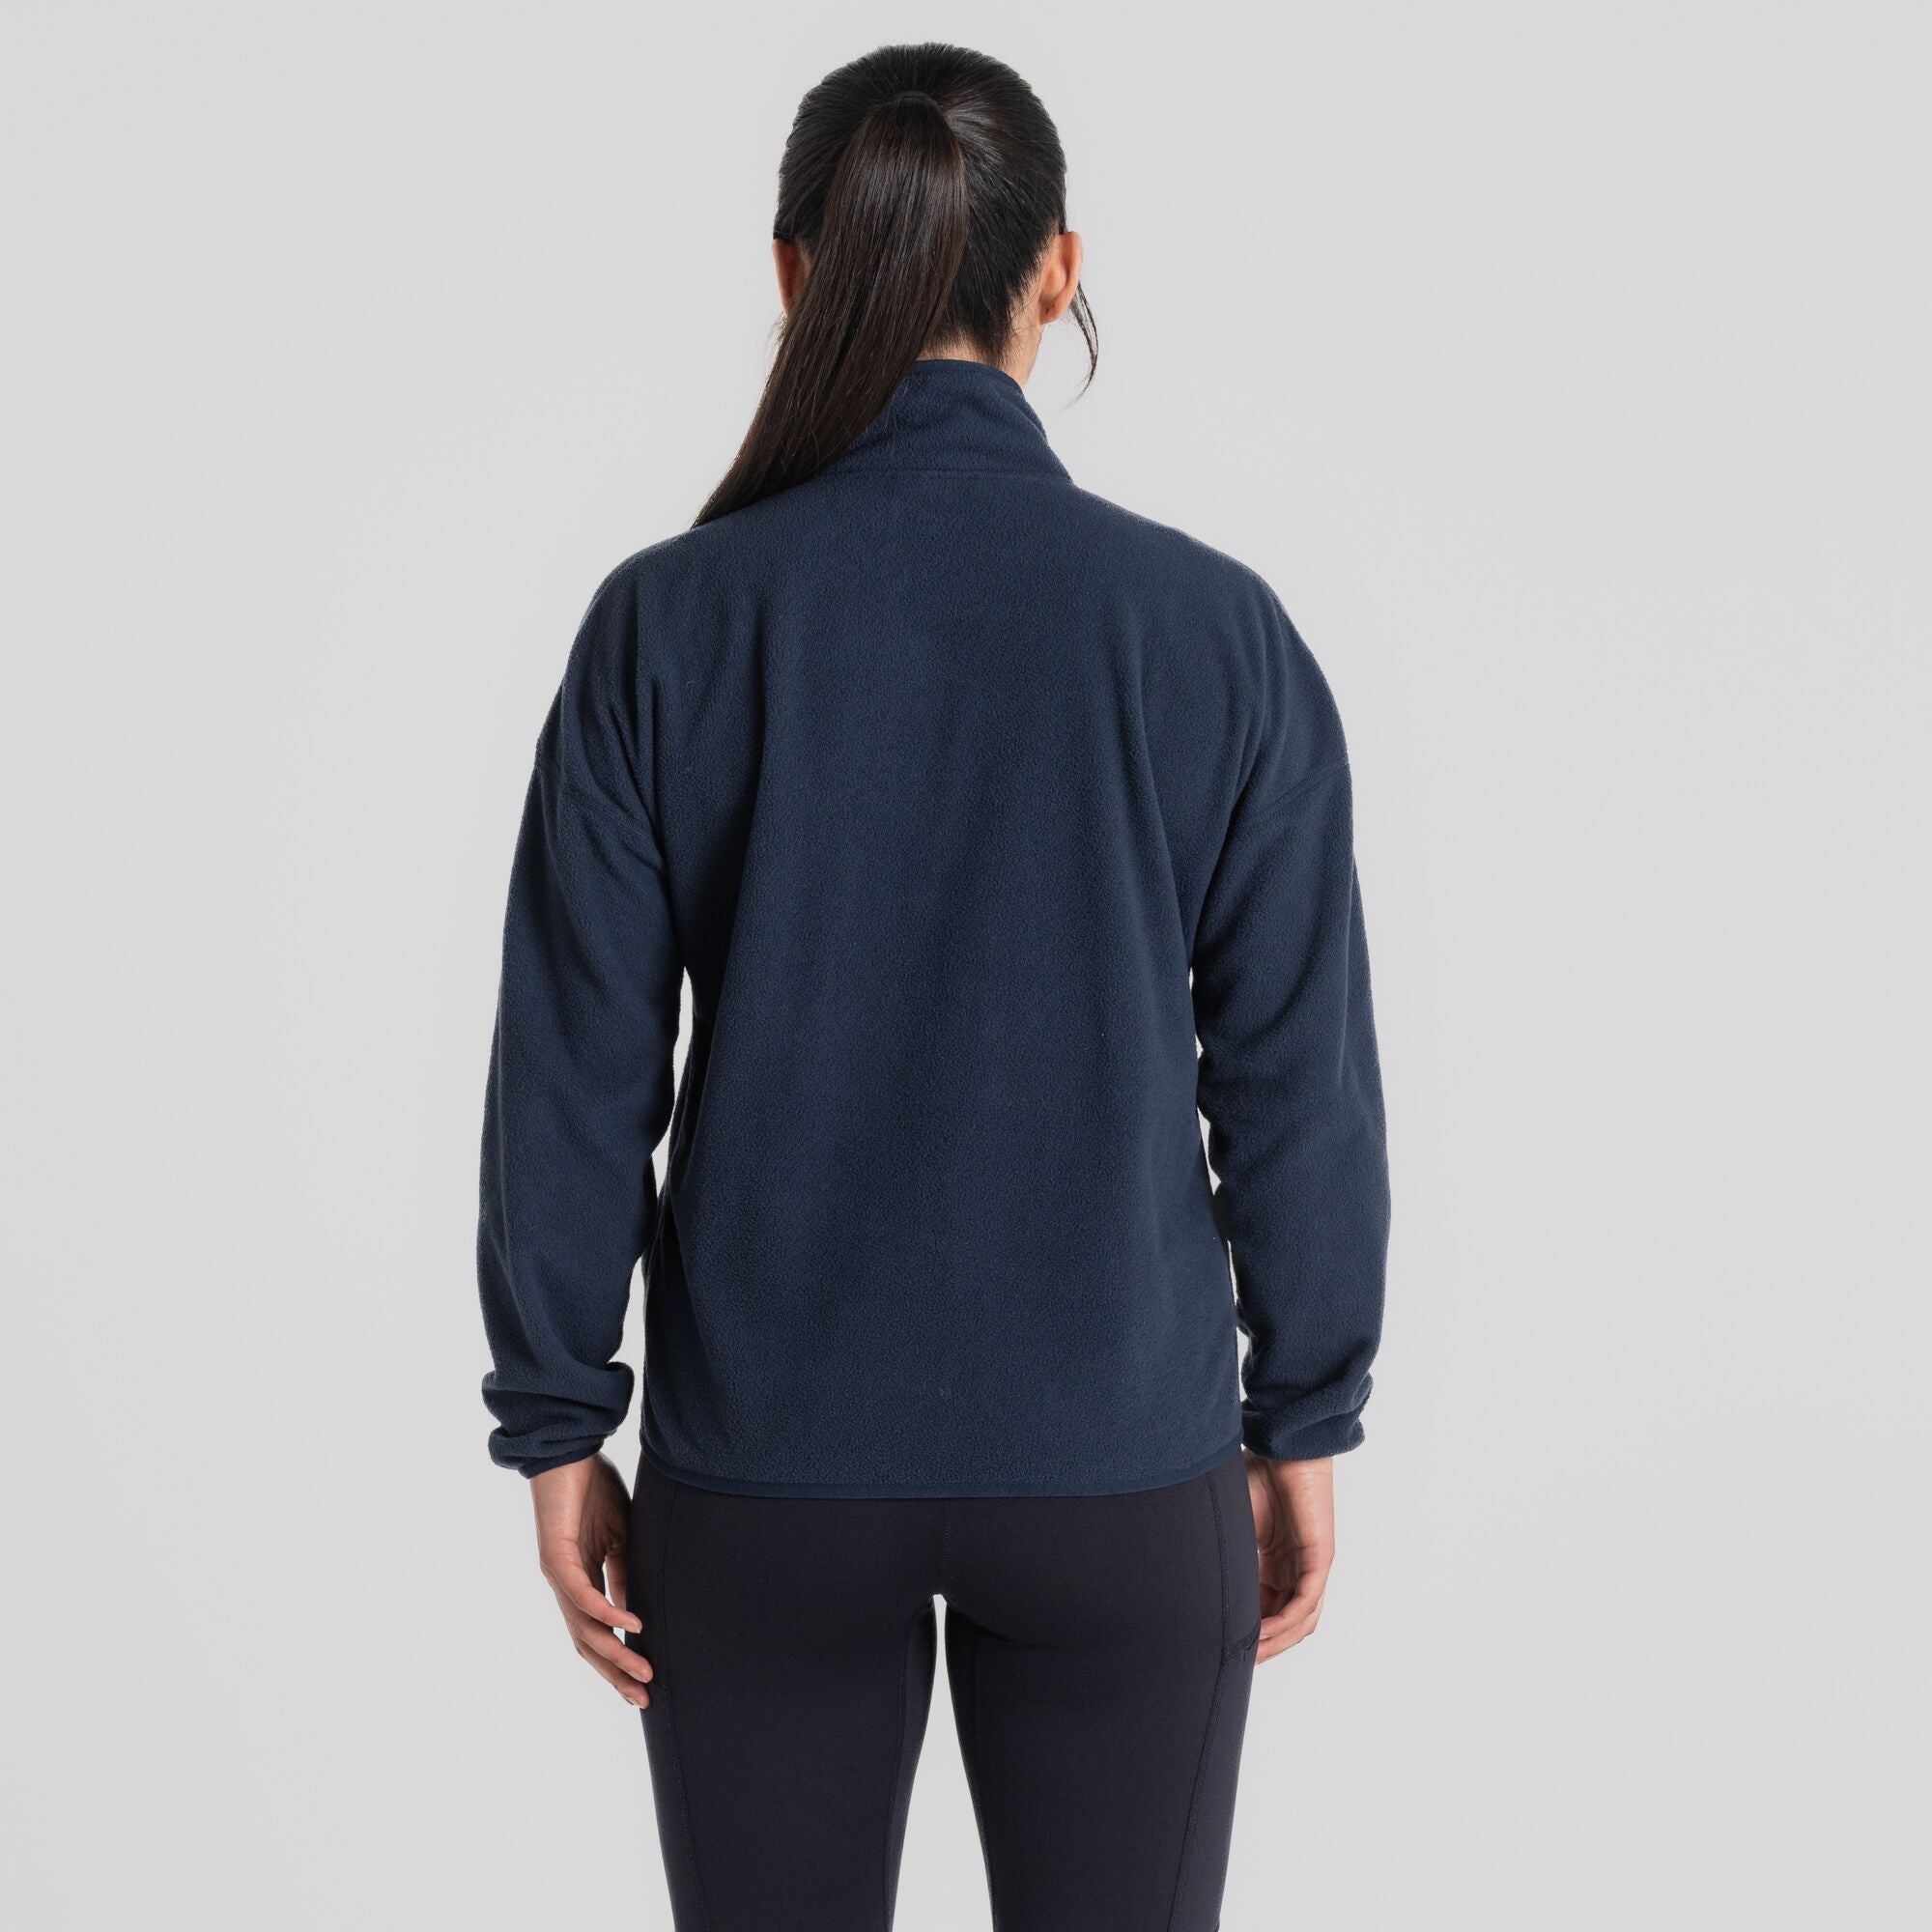 Women's CO2 Renu Full Zip Fleece | Blue Navy